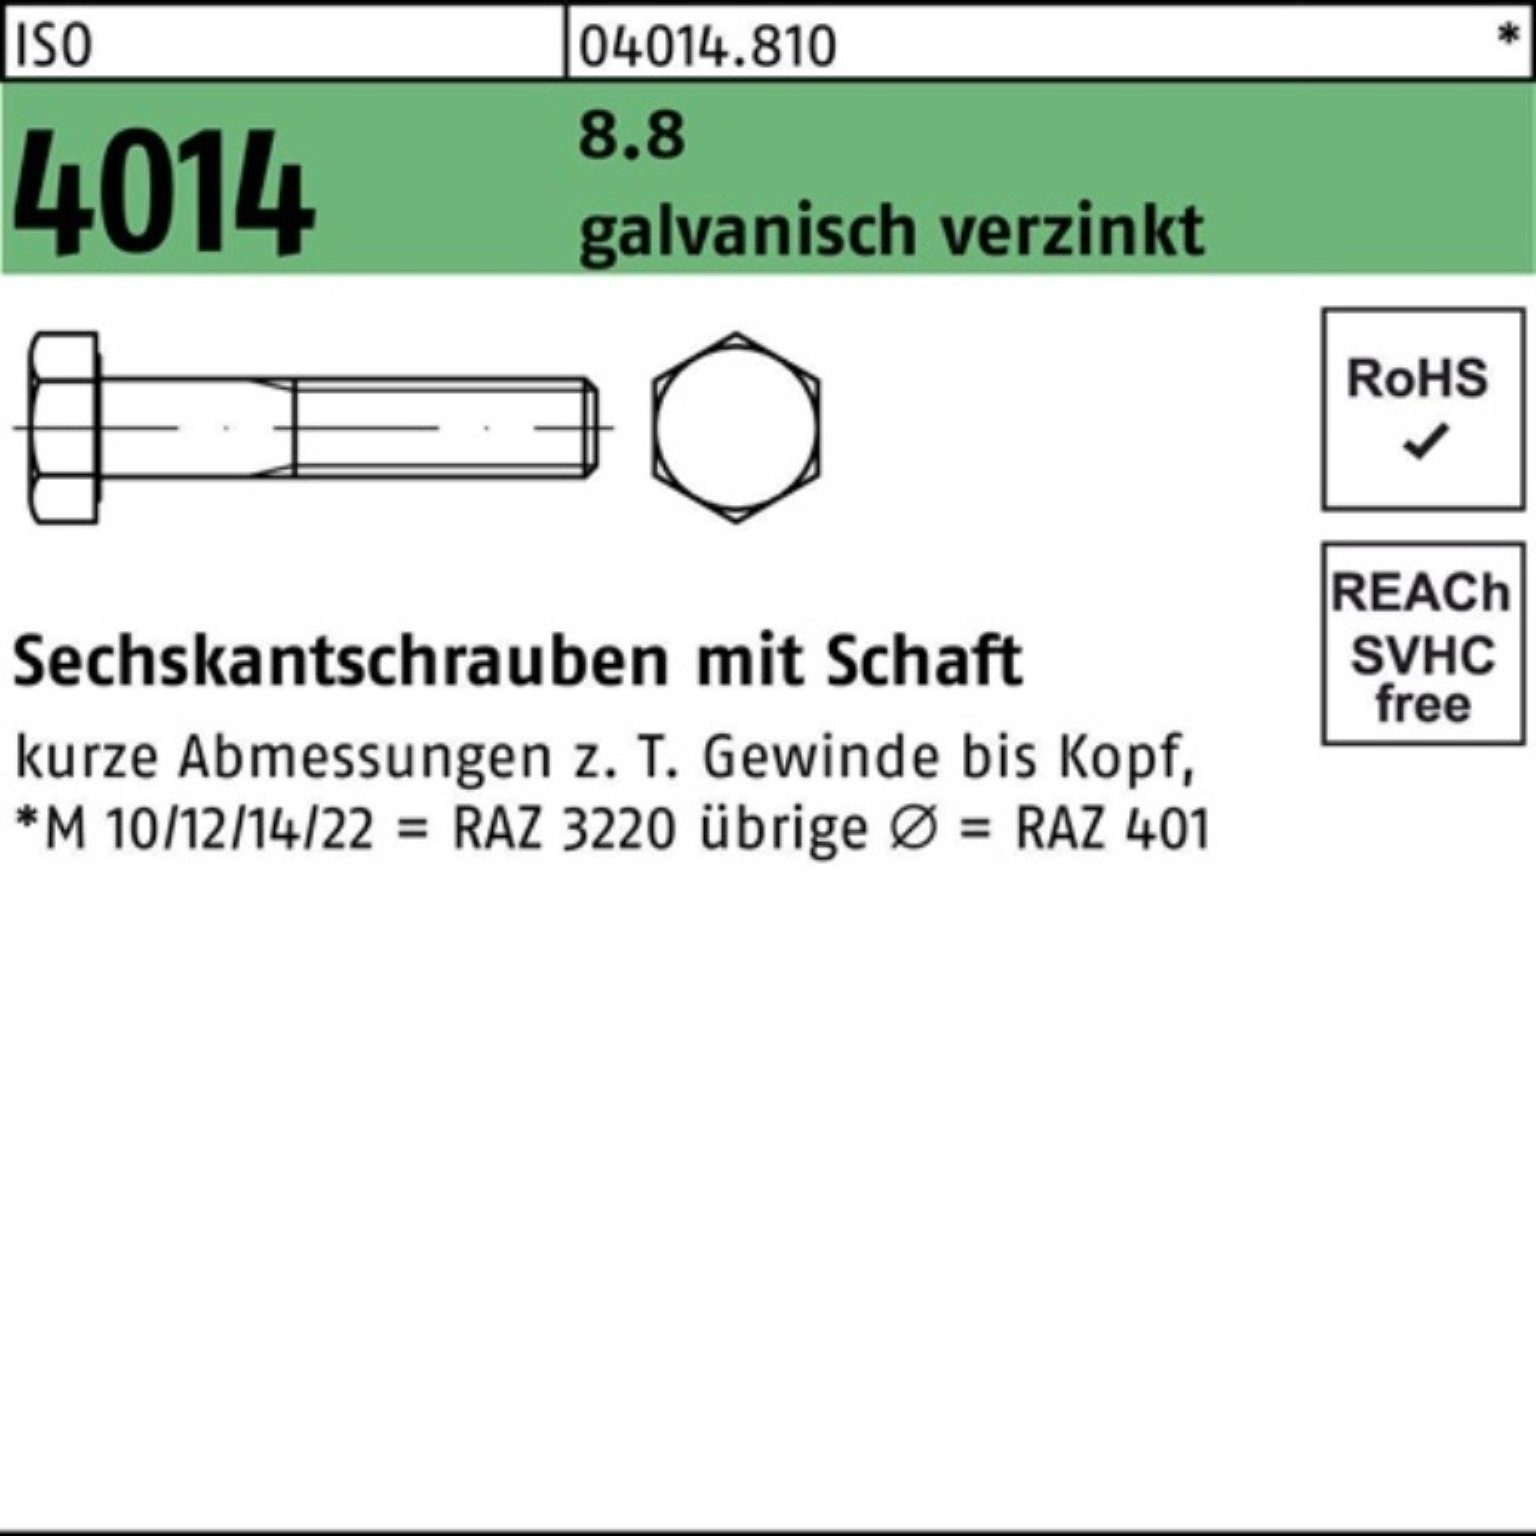 Bufab Sechskantschraube 100er Pack Sechskantschraube ISO 4014 Schaft M18x 200 8.8 galv.verz. 1 | Schrauben